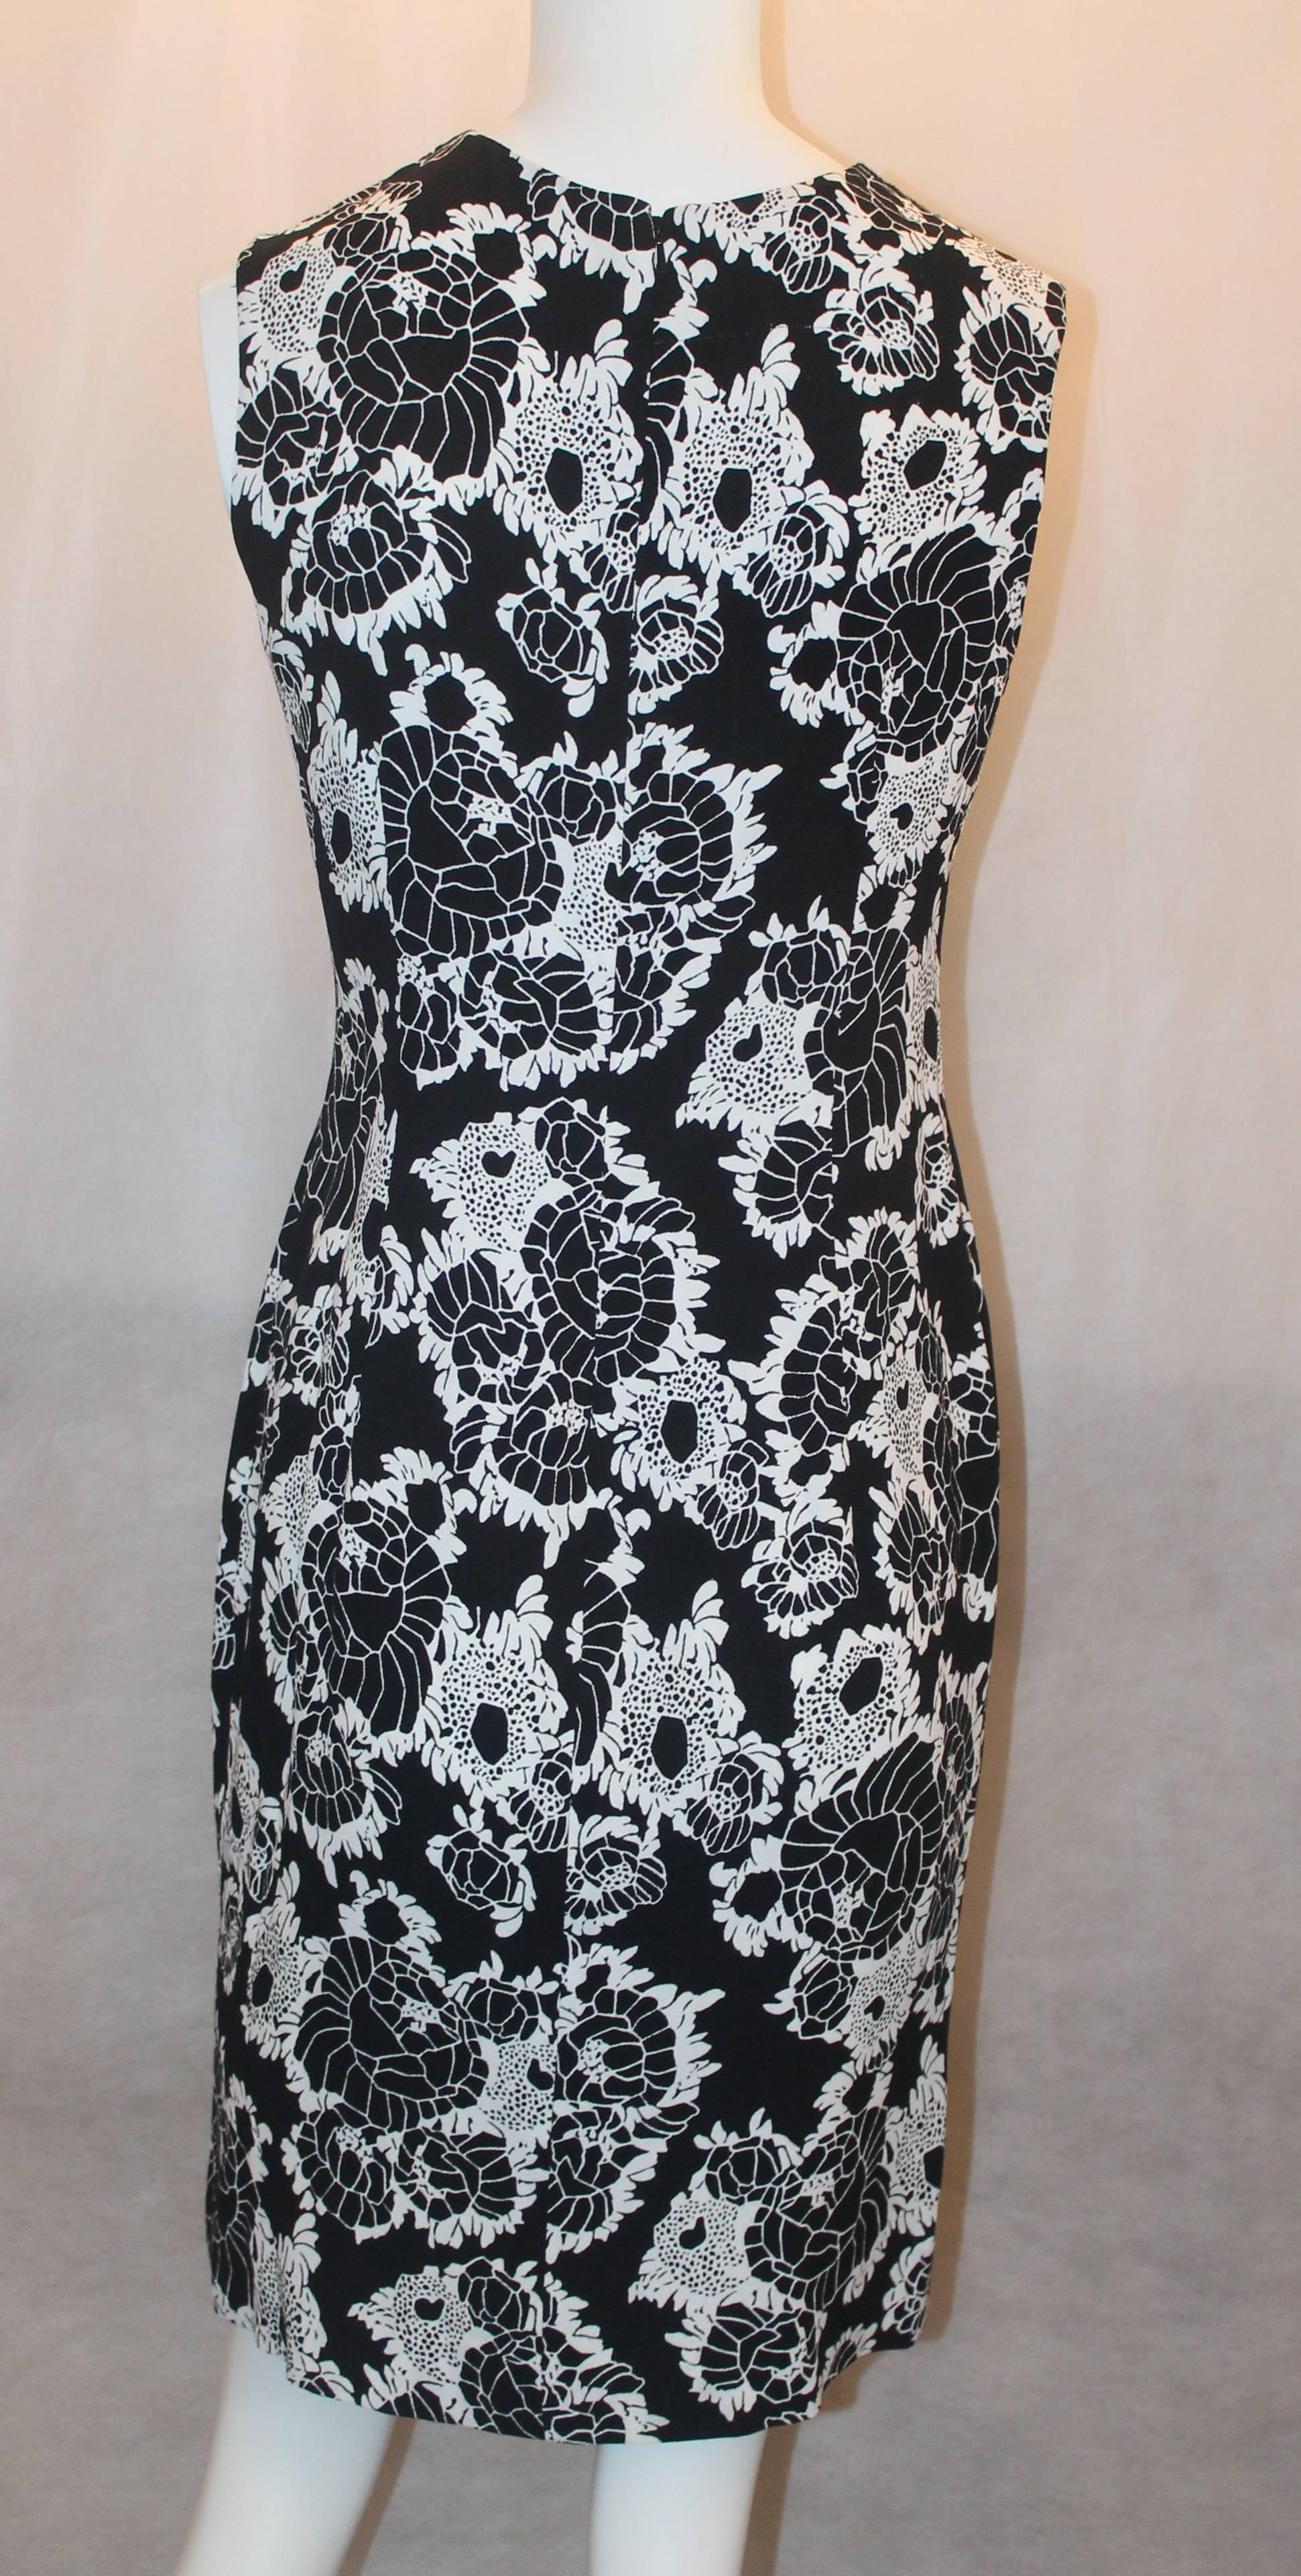 Women's or Men's Oscar de la Renta Black & White Floral Print Dress with Lace - 6